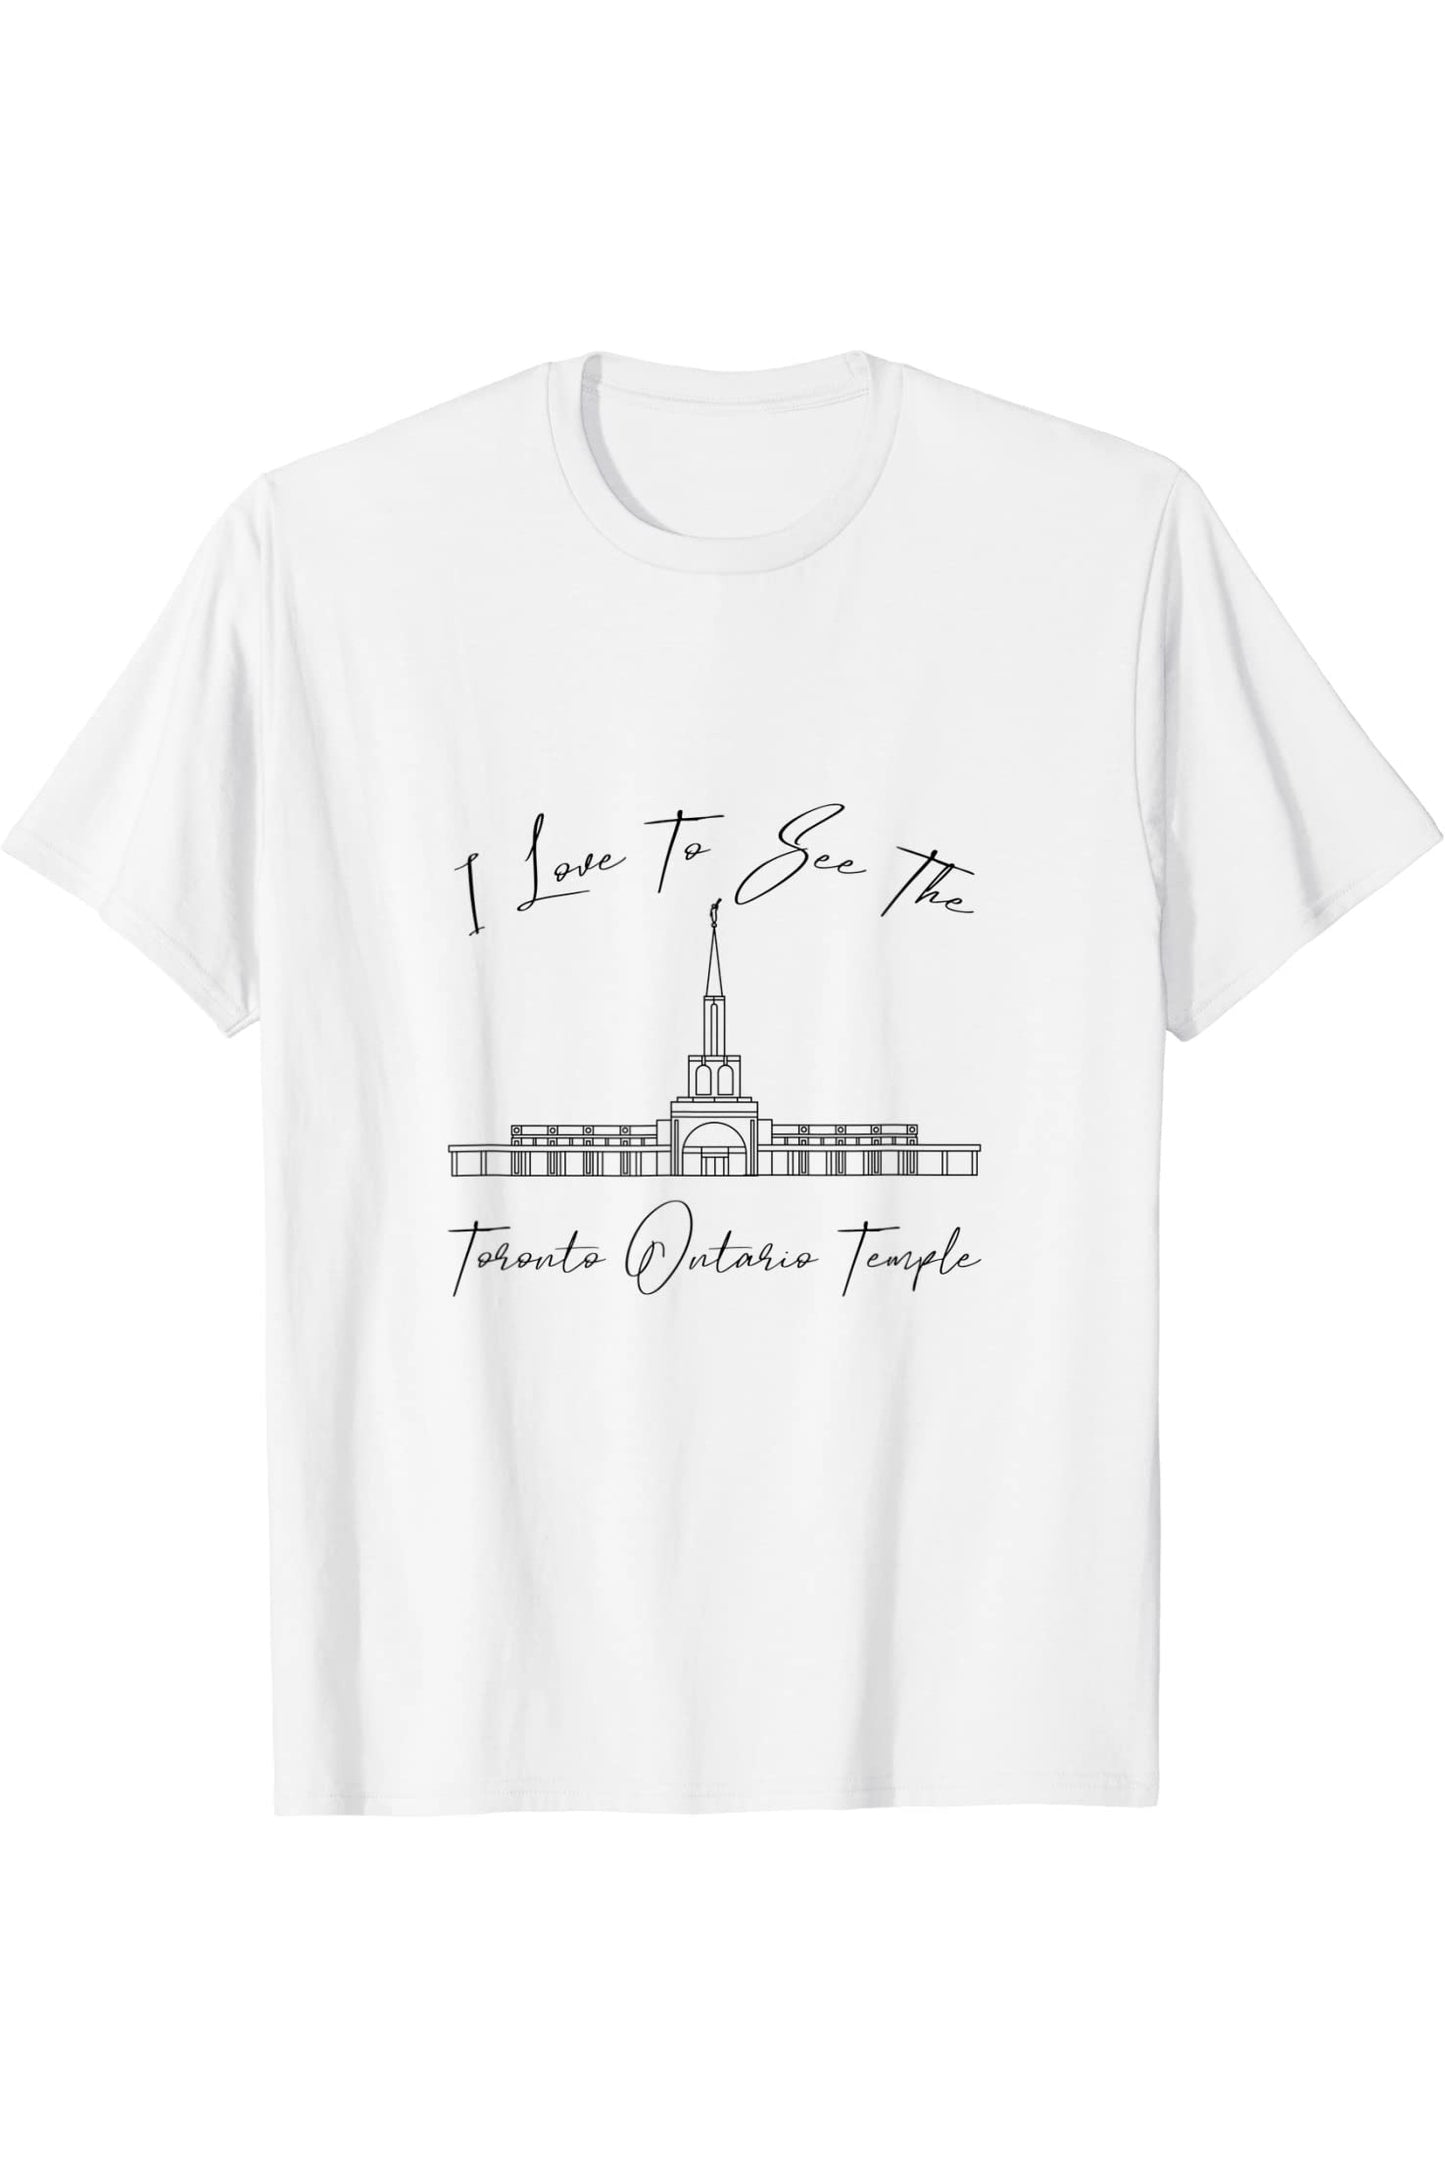 Toronto Ontario Temple T-Shirt - Calligraphy Style (English) US